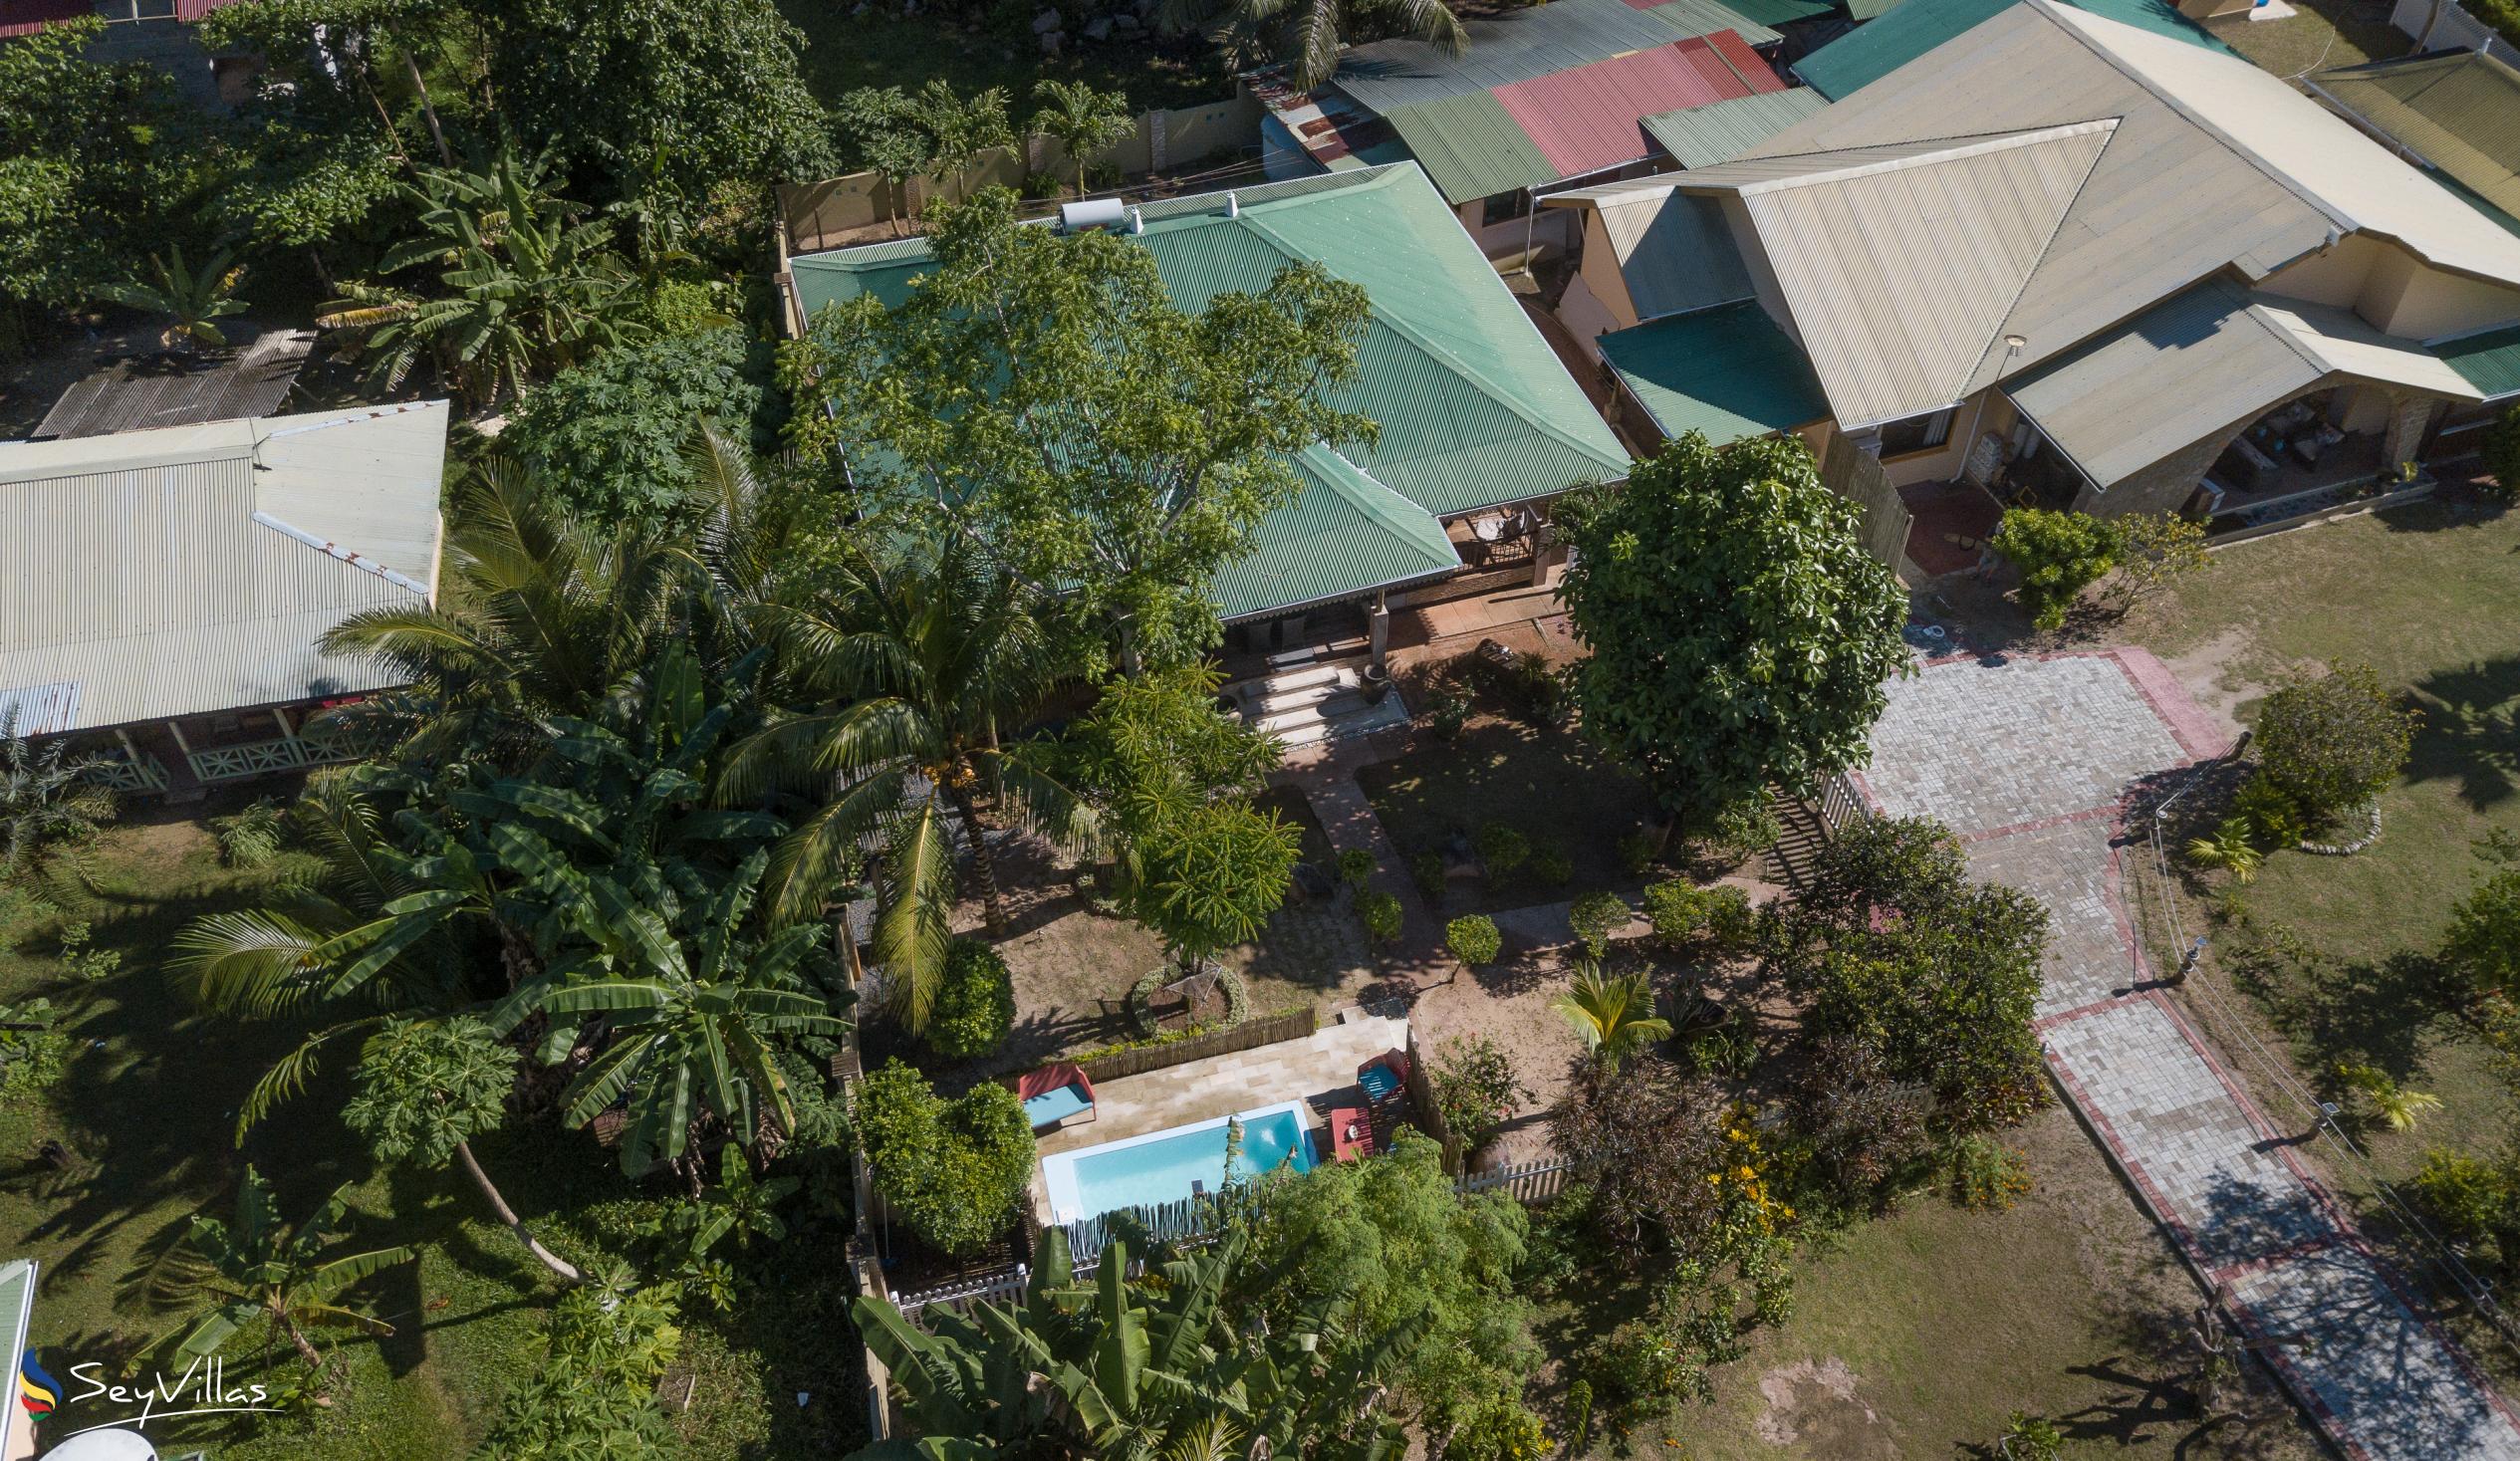 Foto 75: Casa de Leela - Bungalow Luxury con 2 camere e piscina privata - La Digue (Seychelles)